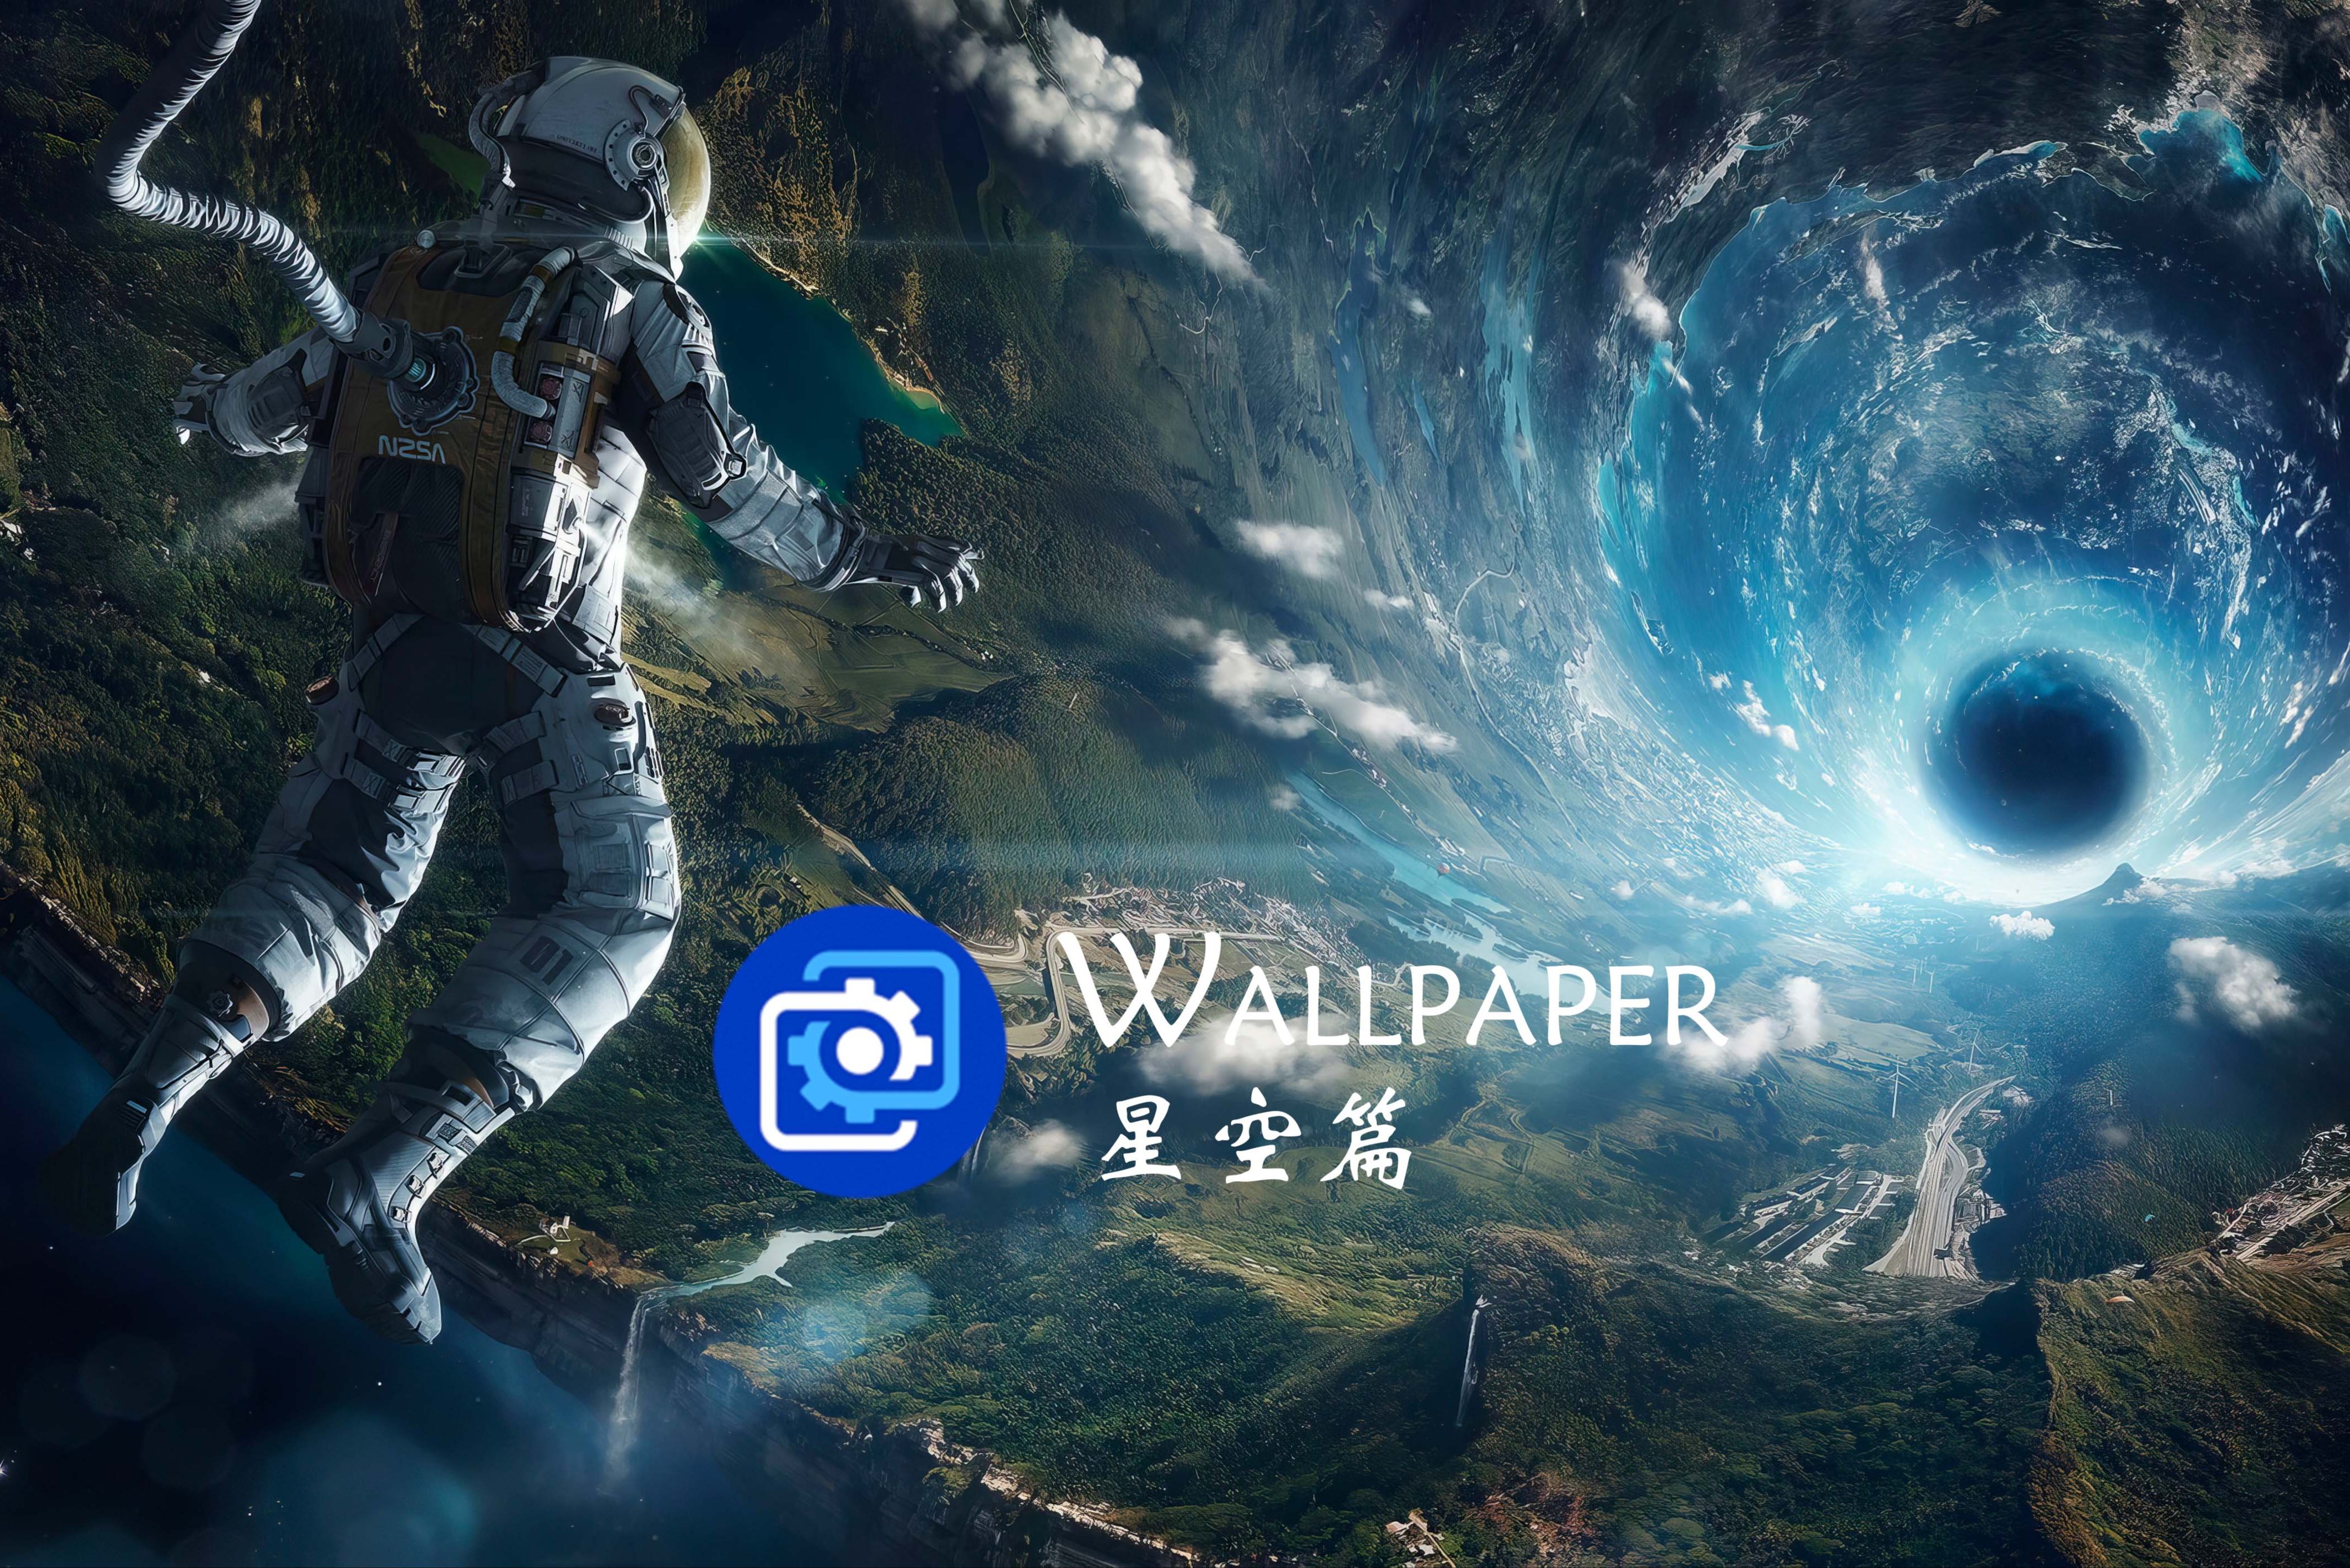 『Wallpaper Engine』绝对的视觉震撼壁纸！星空篇！！